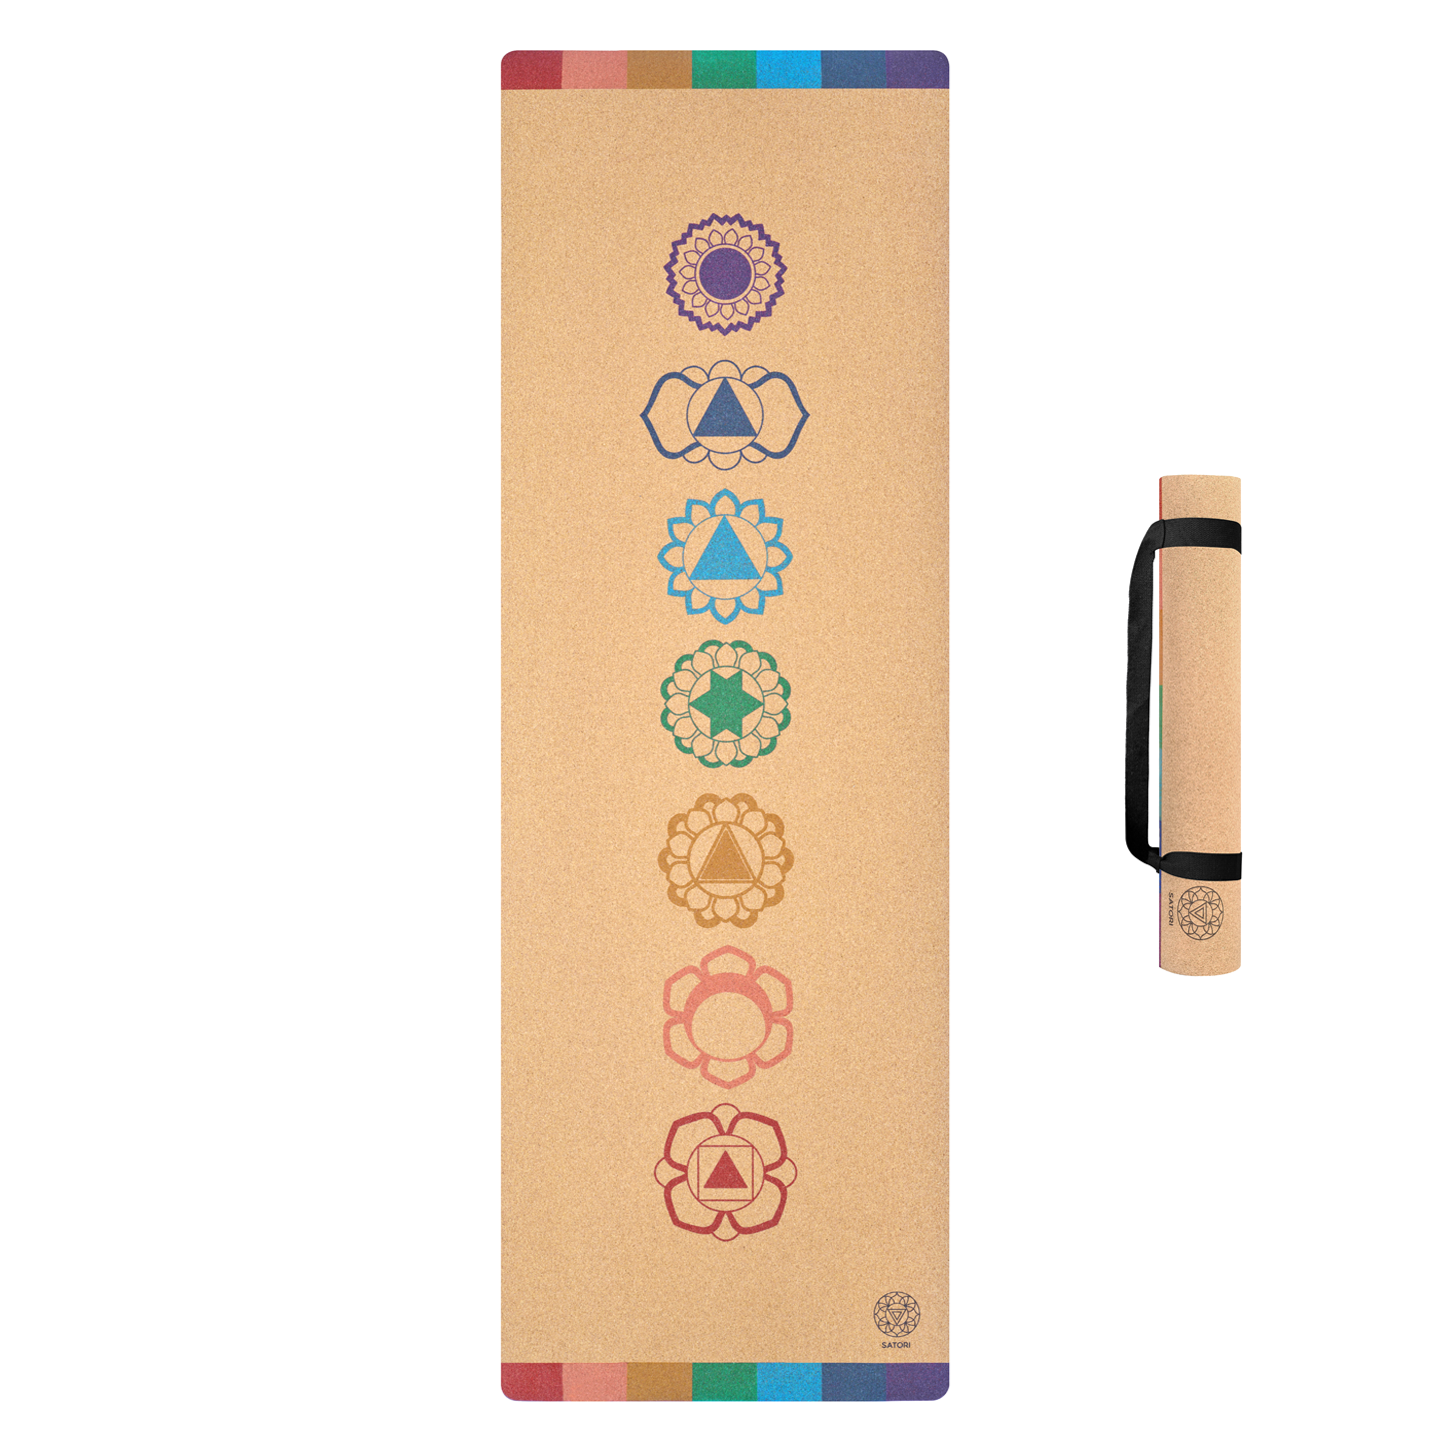 7 Chakras Cork Yoga Mat by Valka Yoga